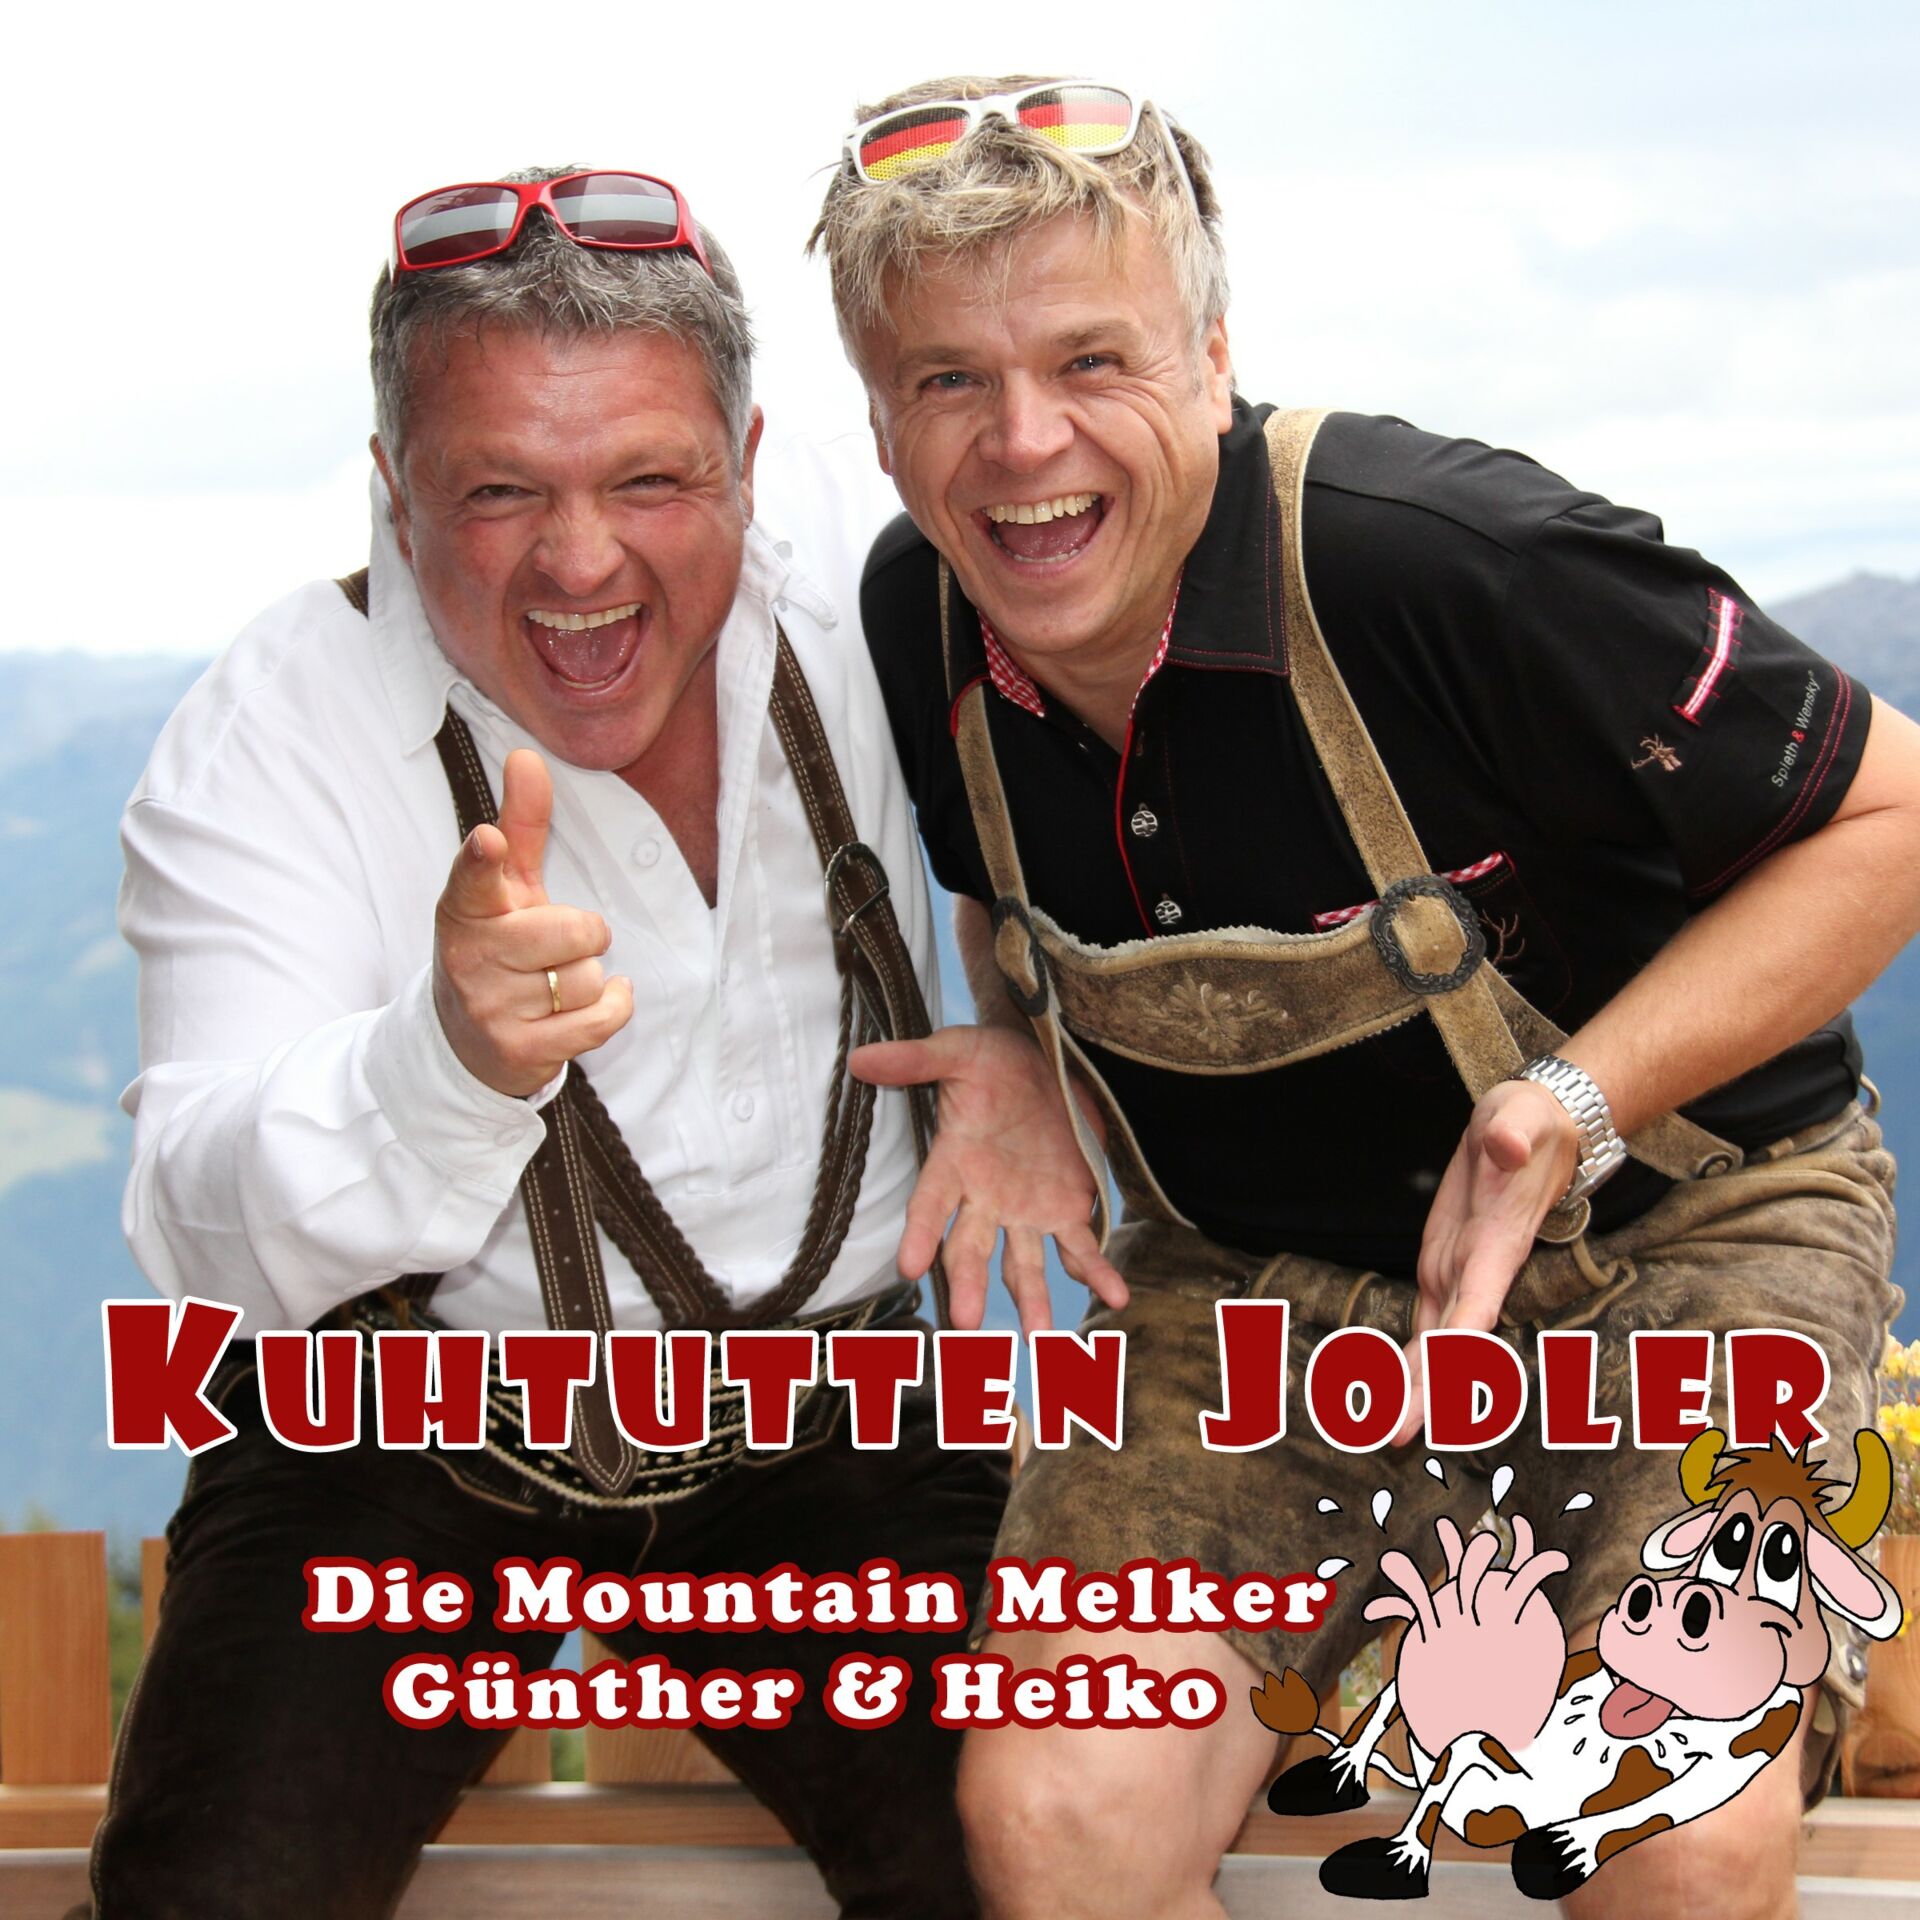 Mountain Melkers Günther & Heiko "Kuhtuttnjodler"